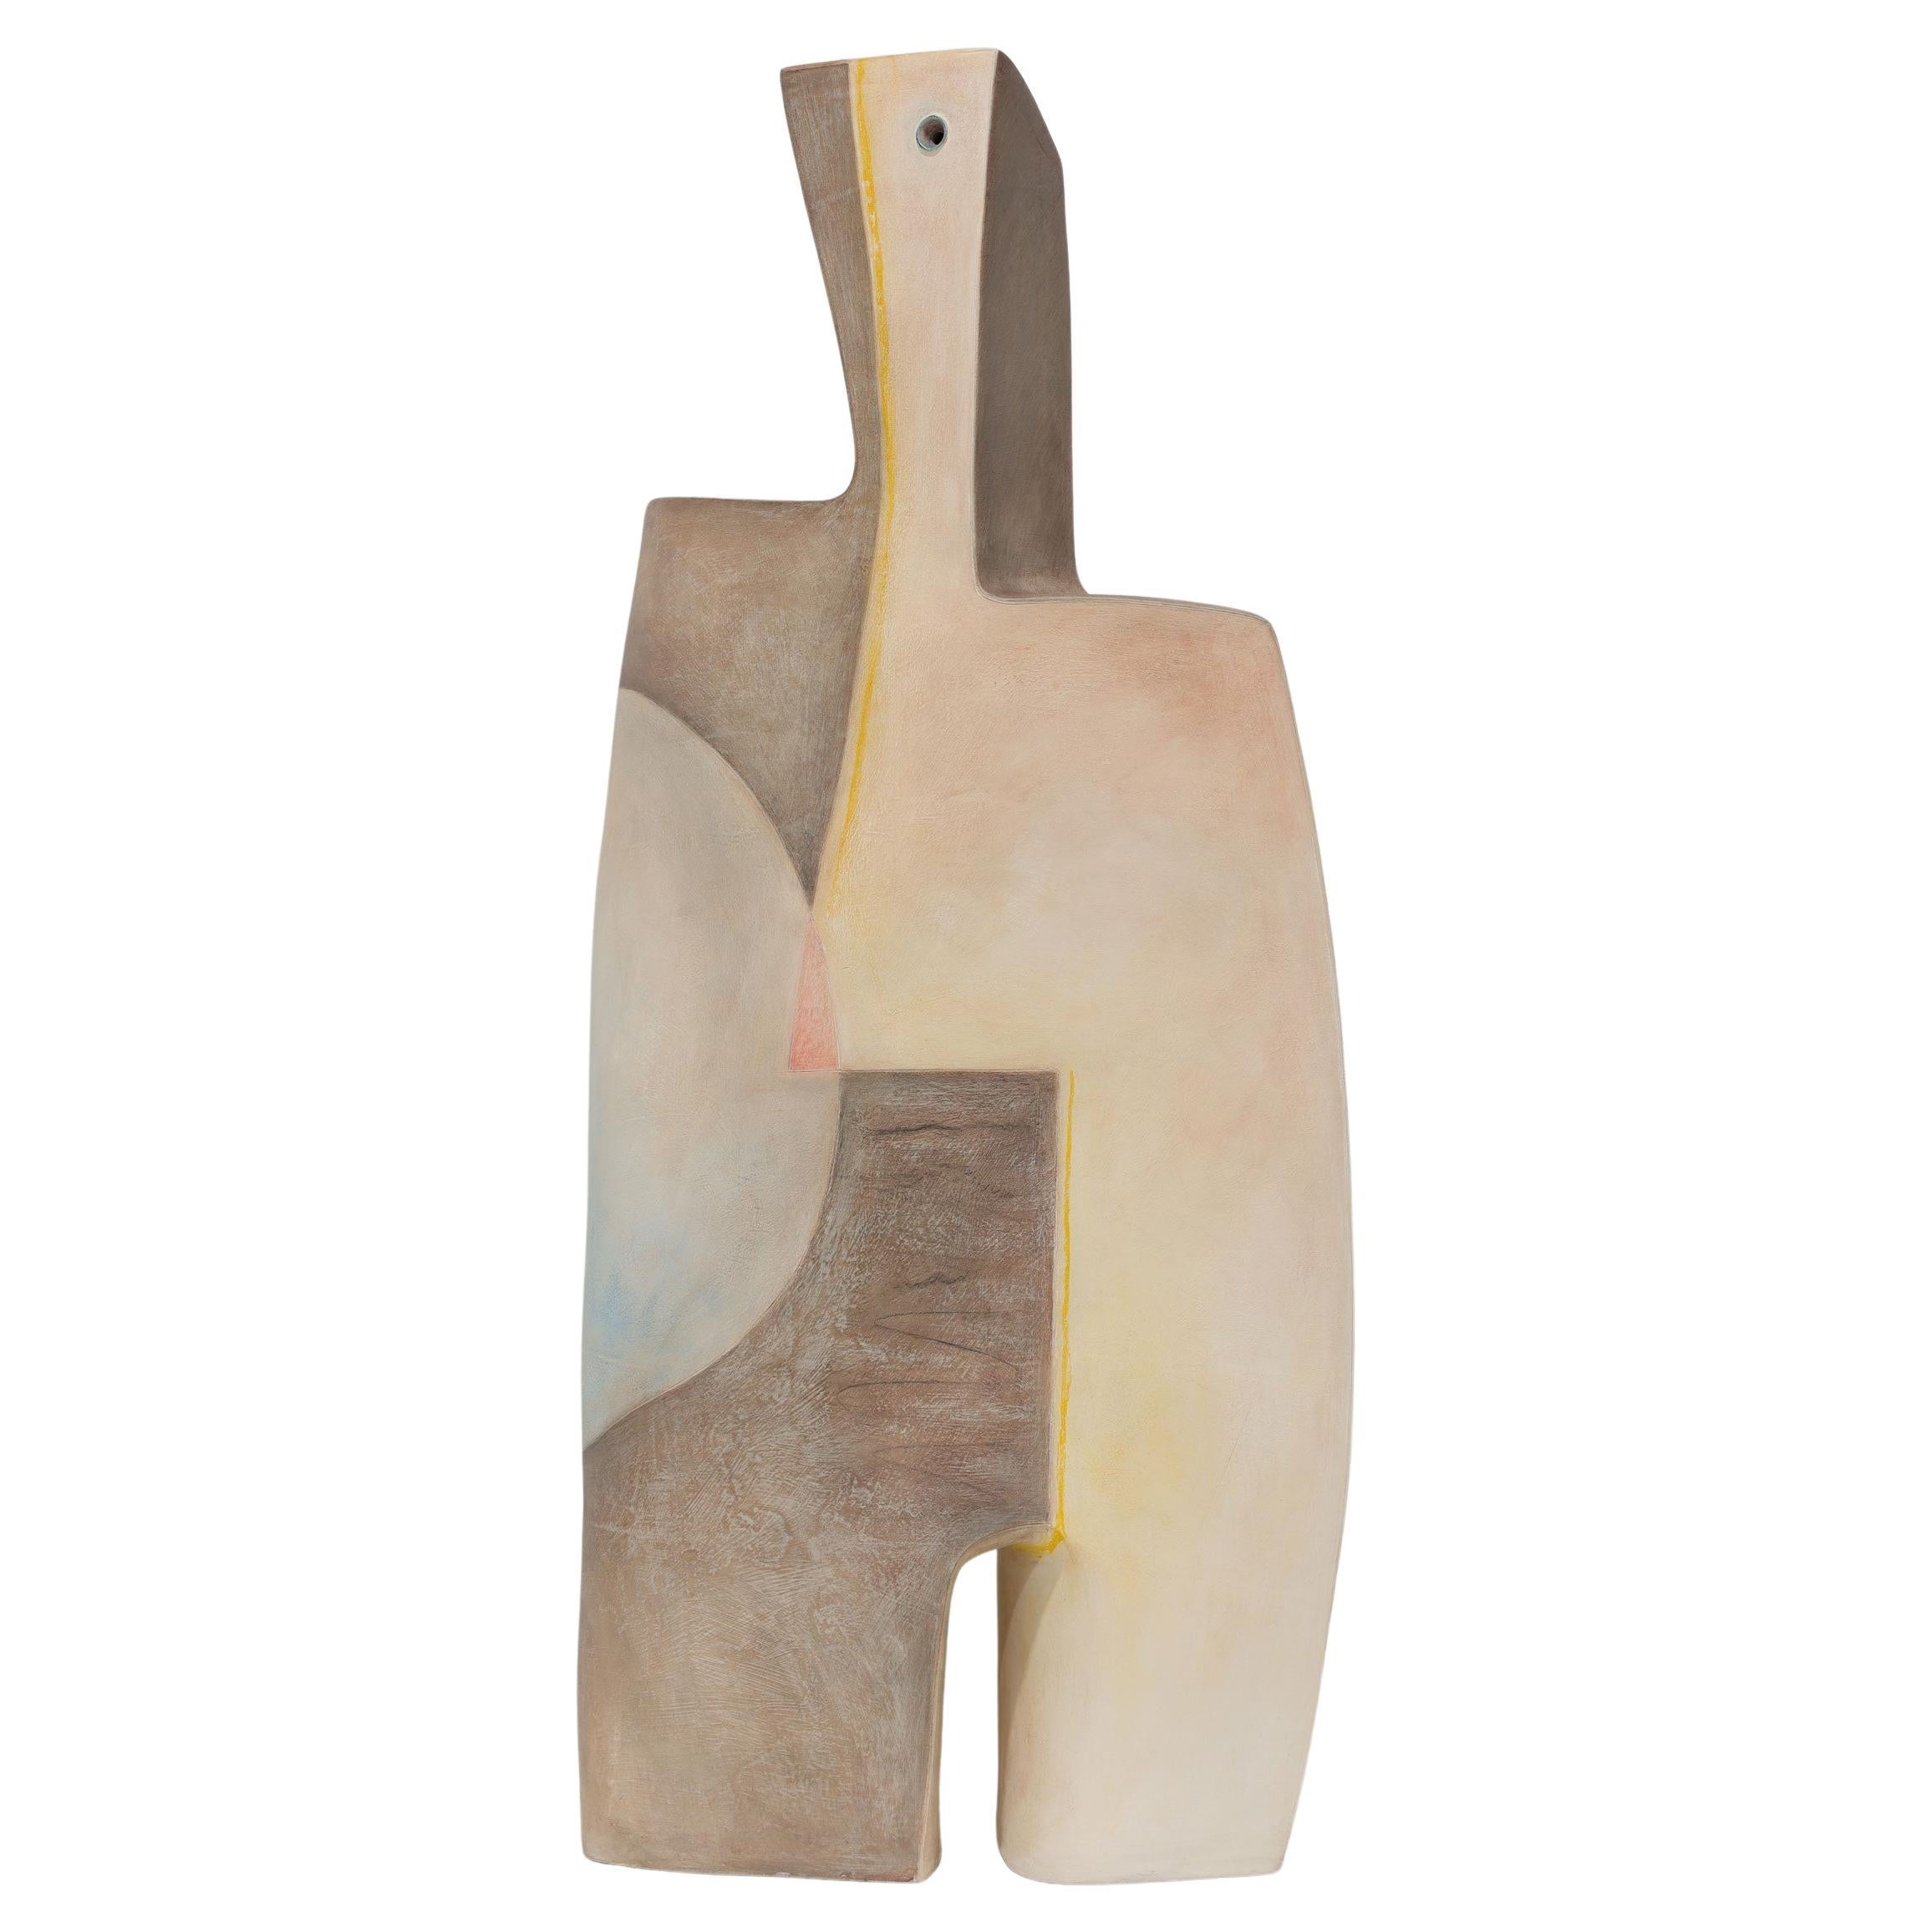 Mary-Ann Prack 36" Tall Bisque Ceramic Sculpture, "Awakening", dtd. 1999